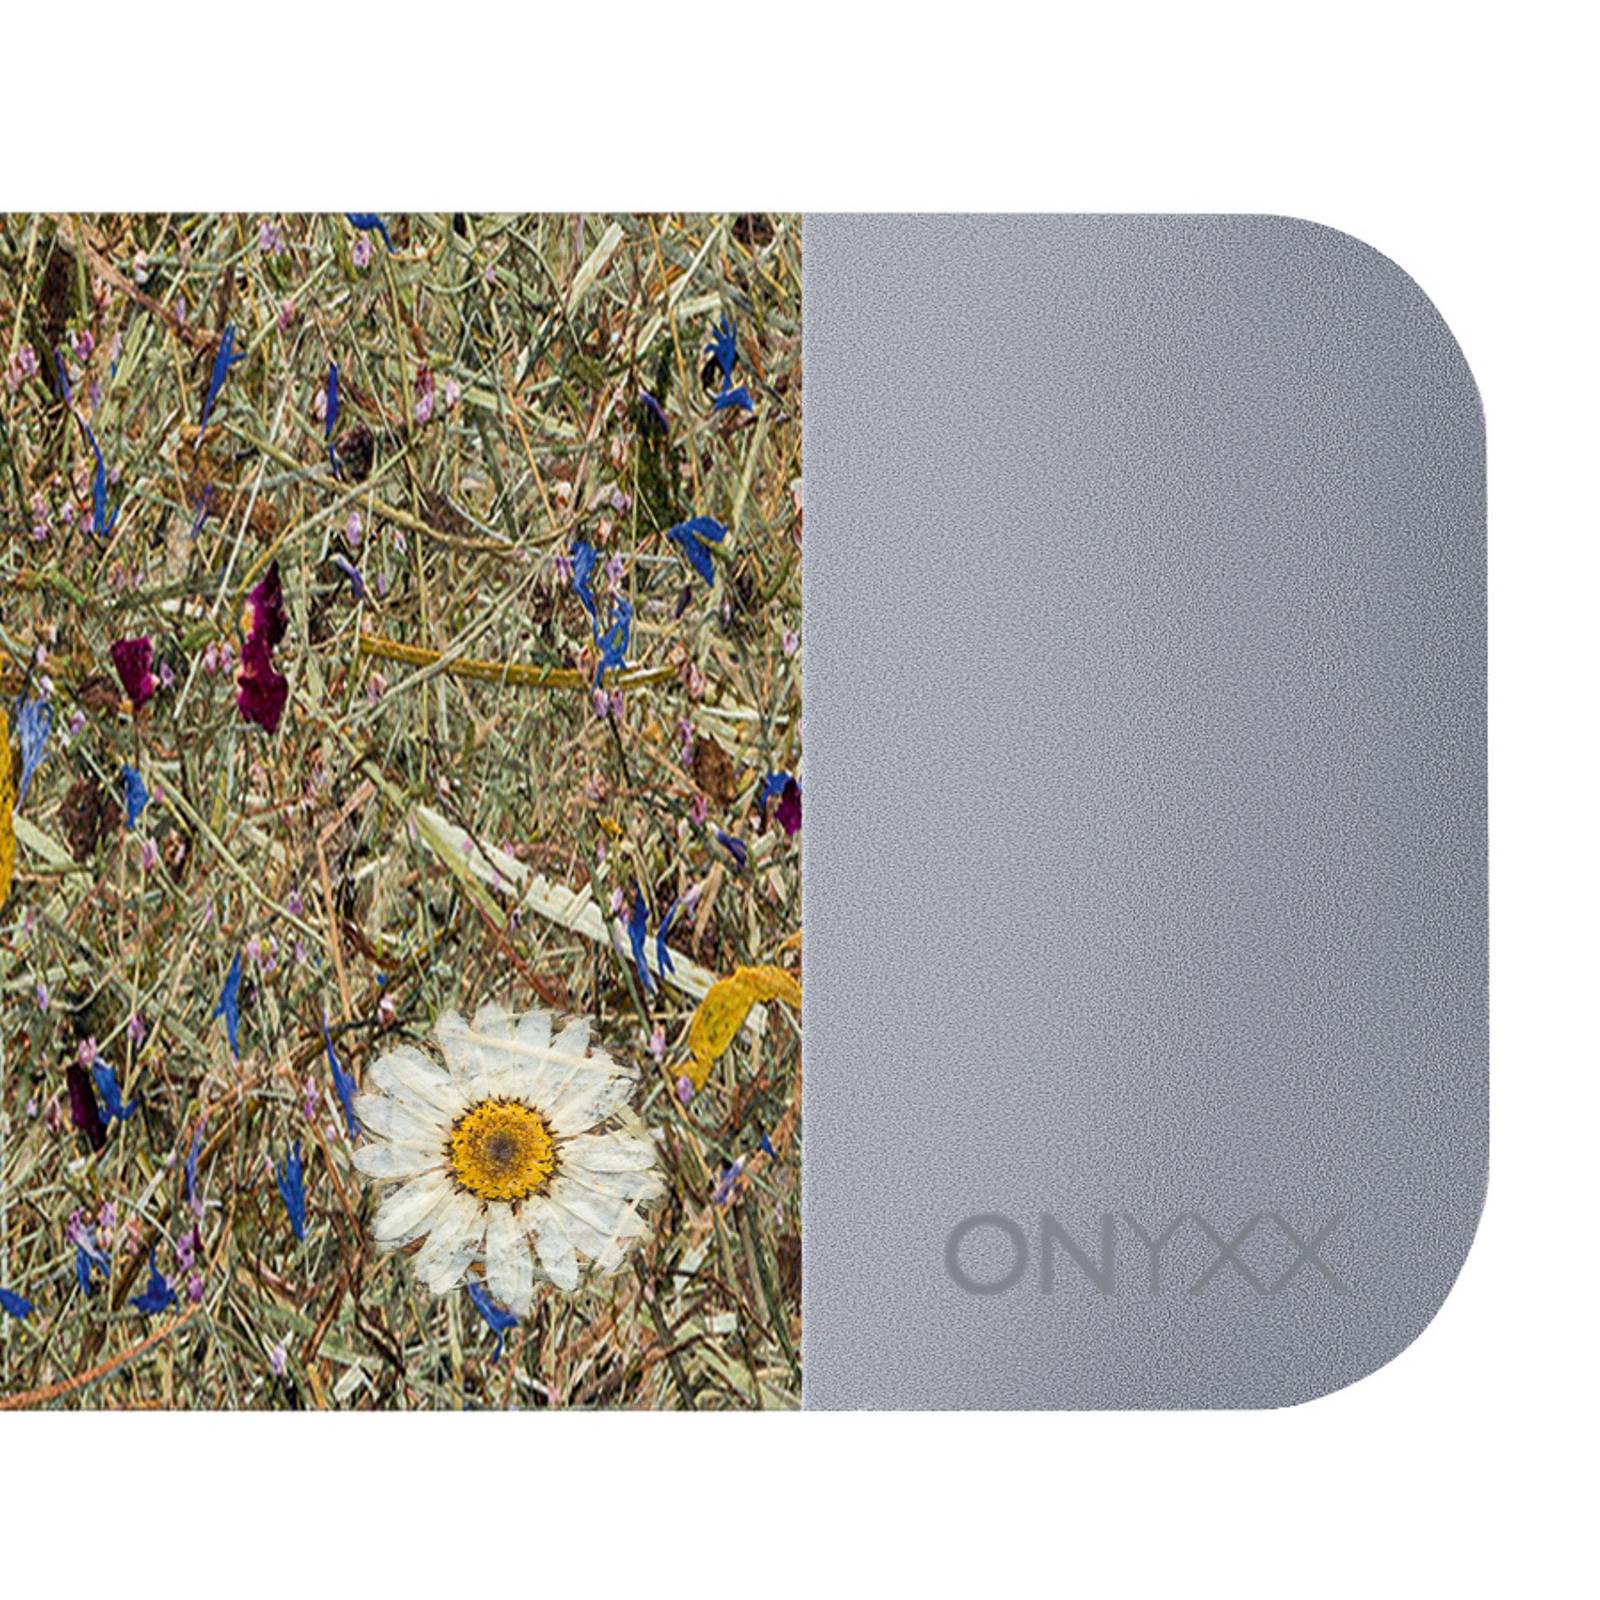 GRIMMEISEN Onyxx Linea Pro pendel alpeeng/sølv